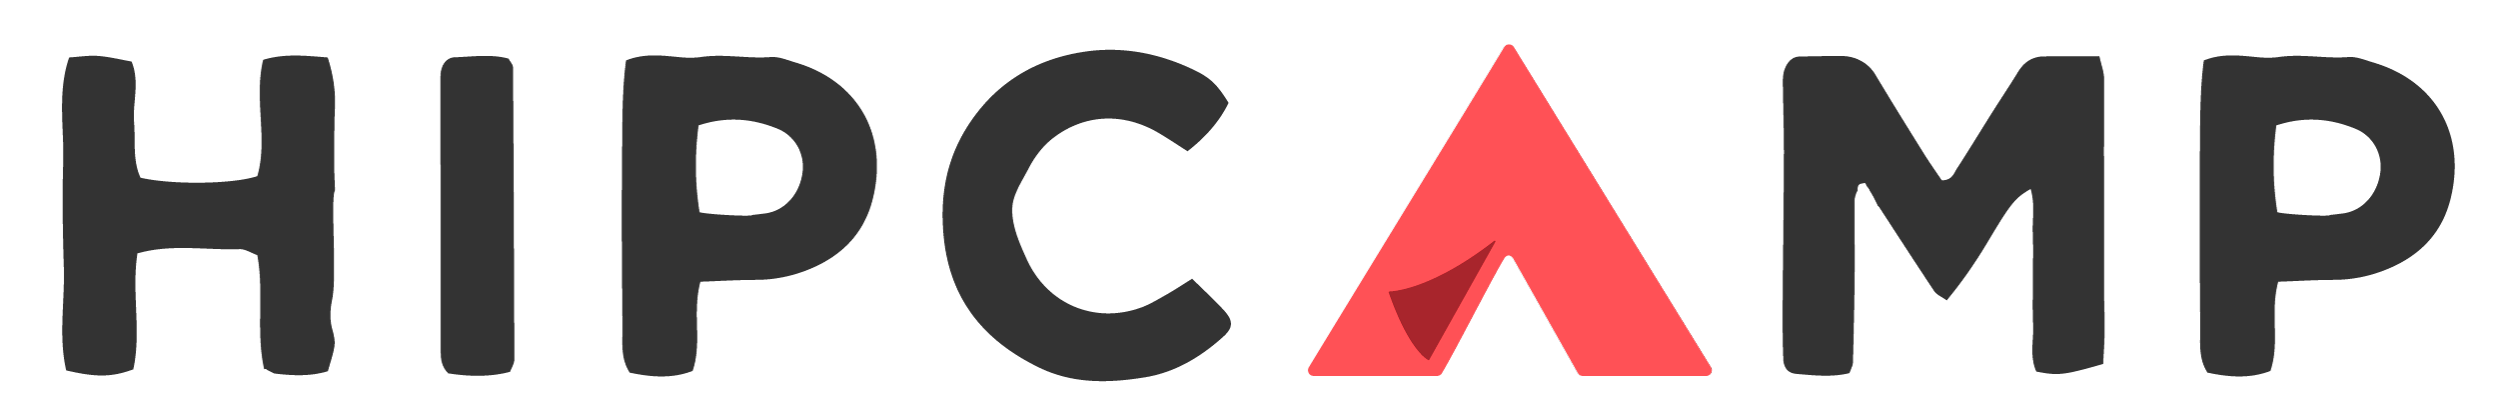 File:Hipcamp Logo -Wordmark -FullColor.png - Wikipedia